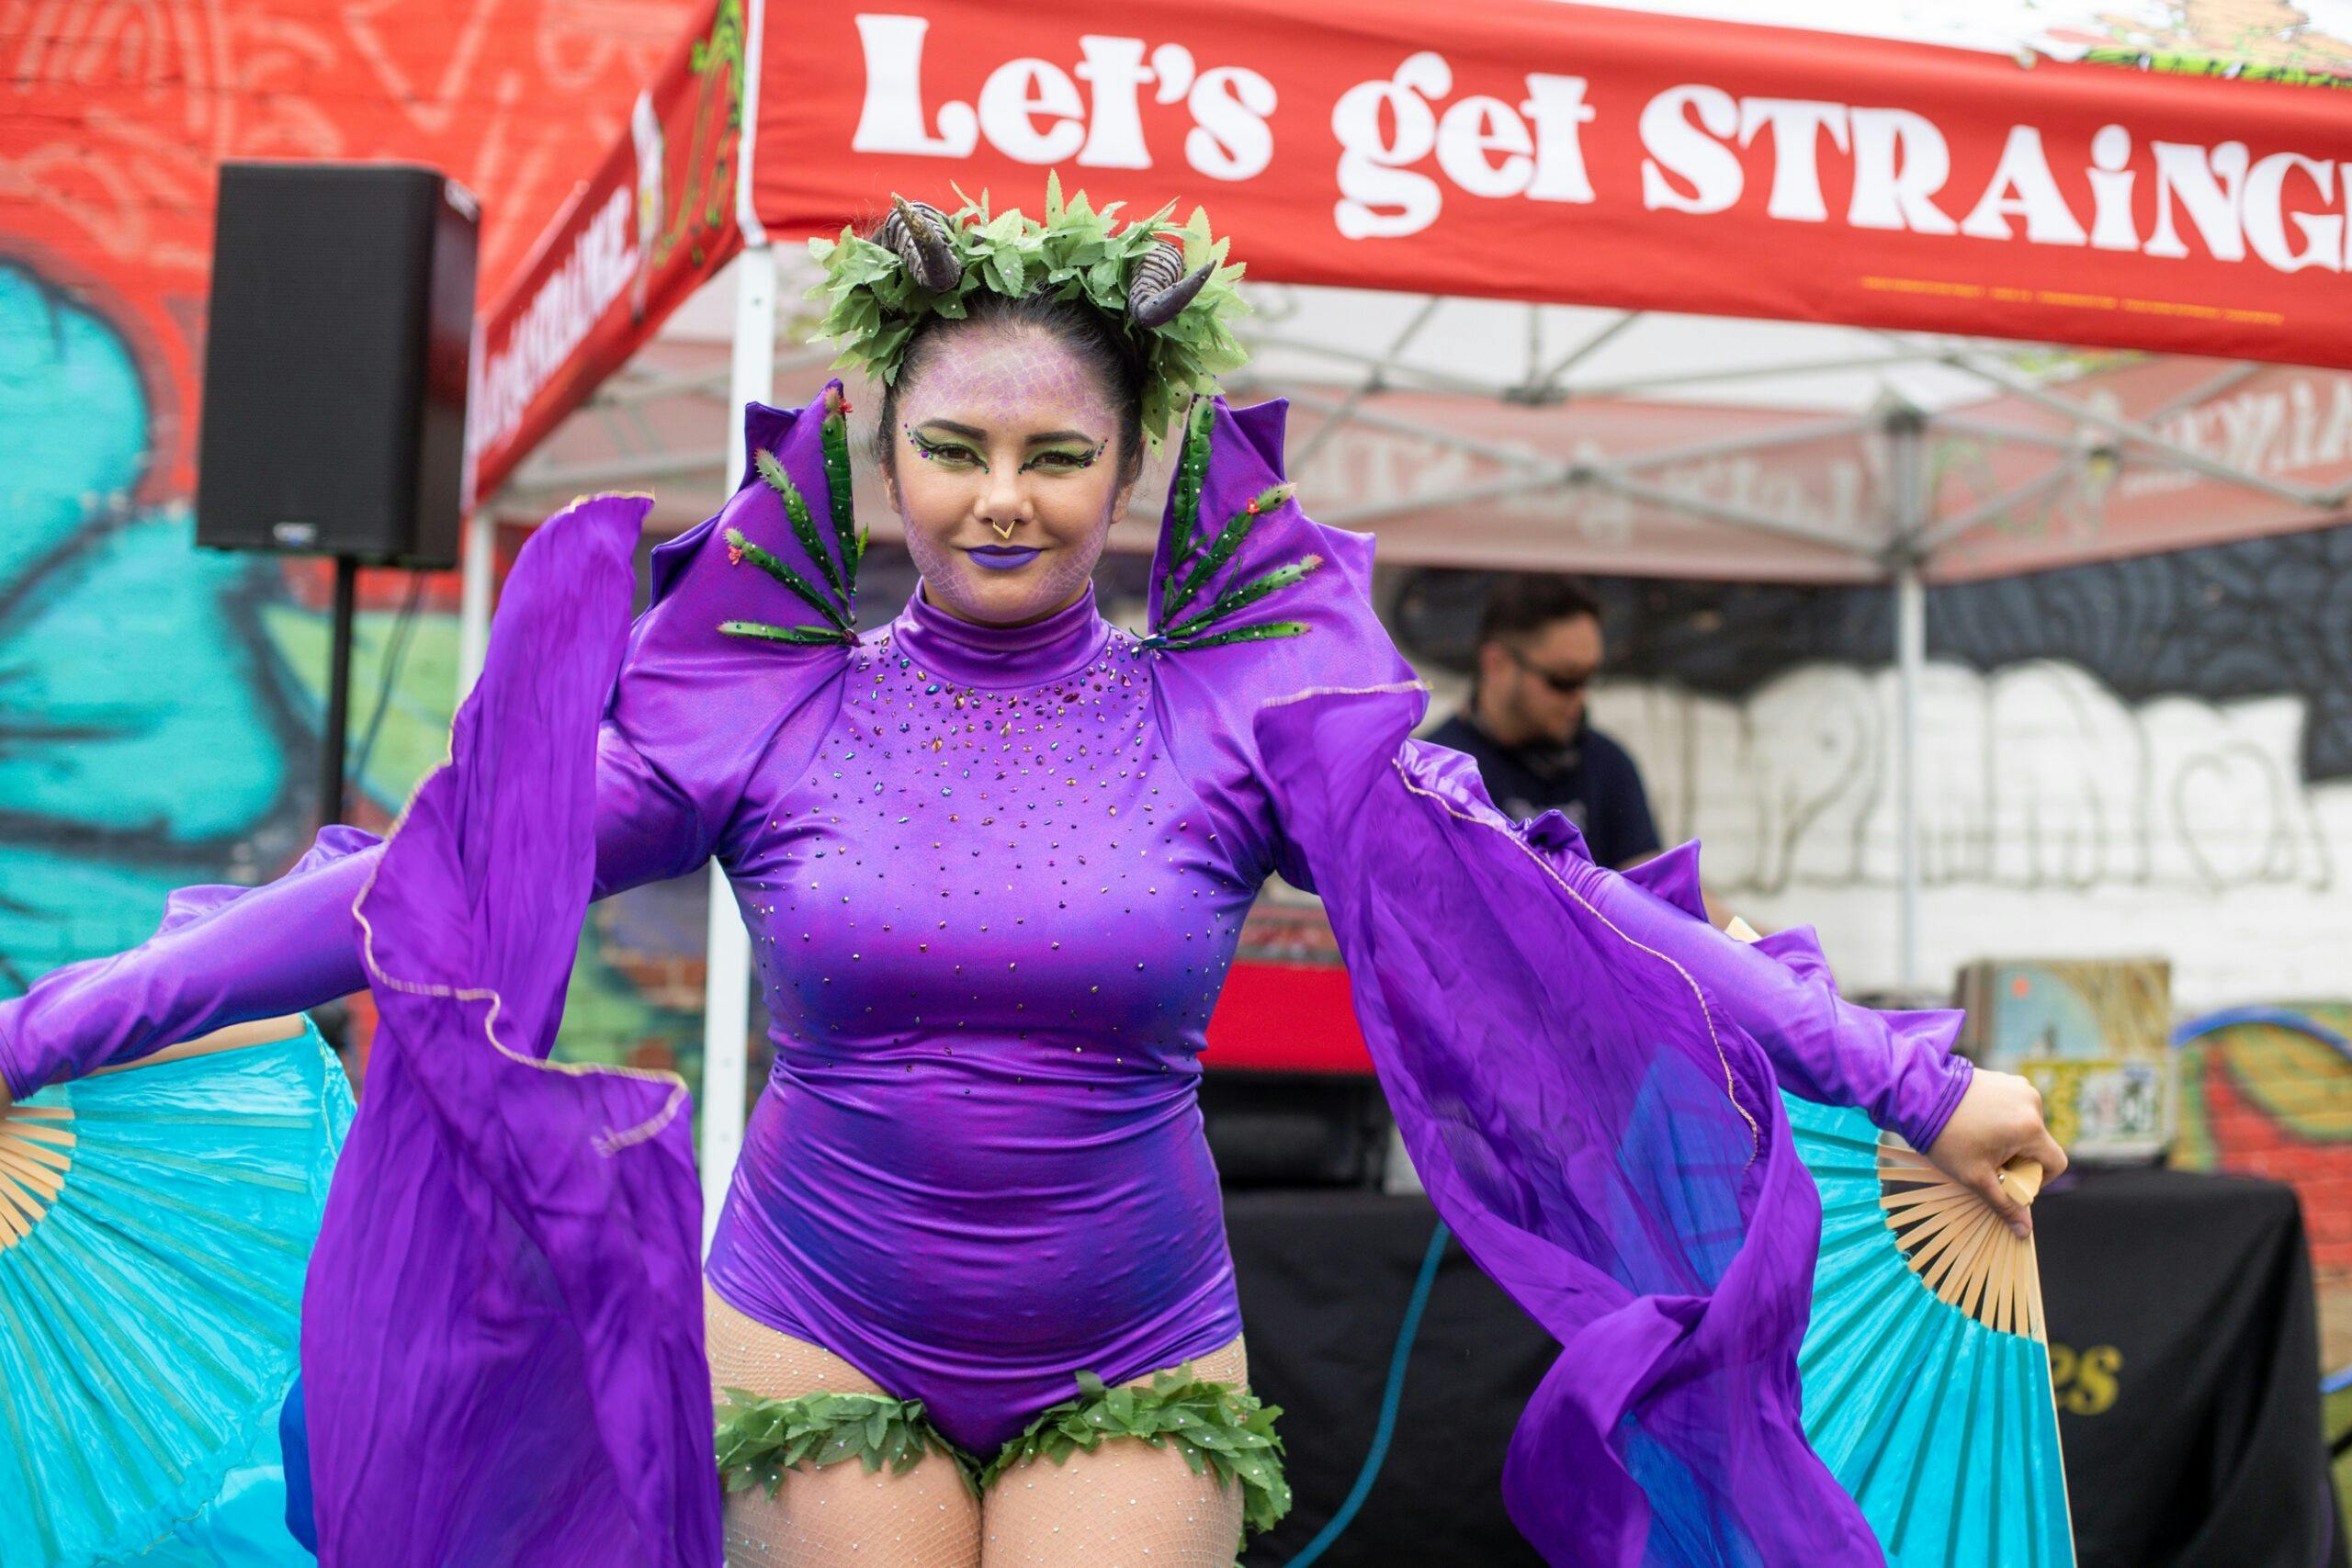 Festival goer dressed in purple costume